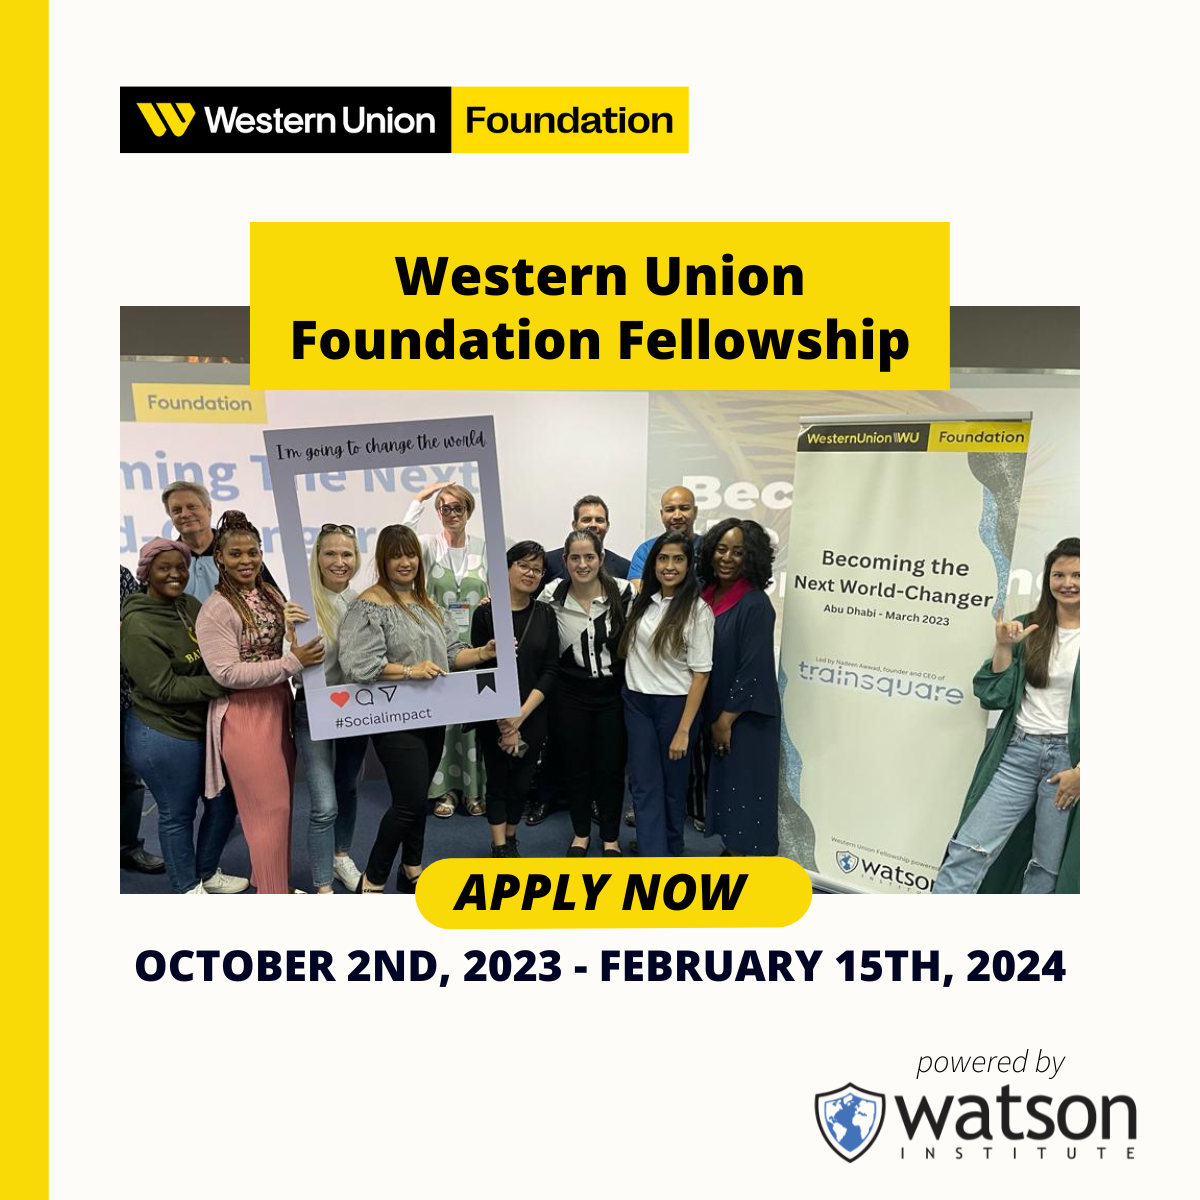 2023 Western Union Foundation Fellowship